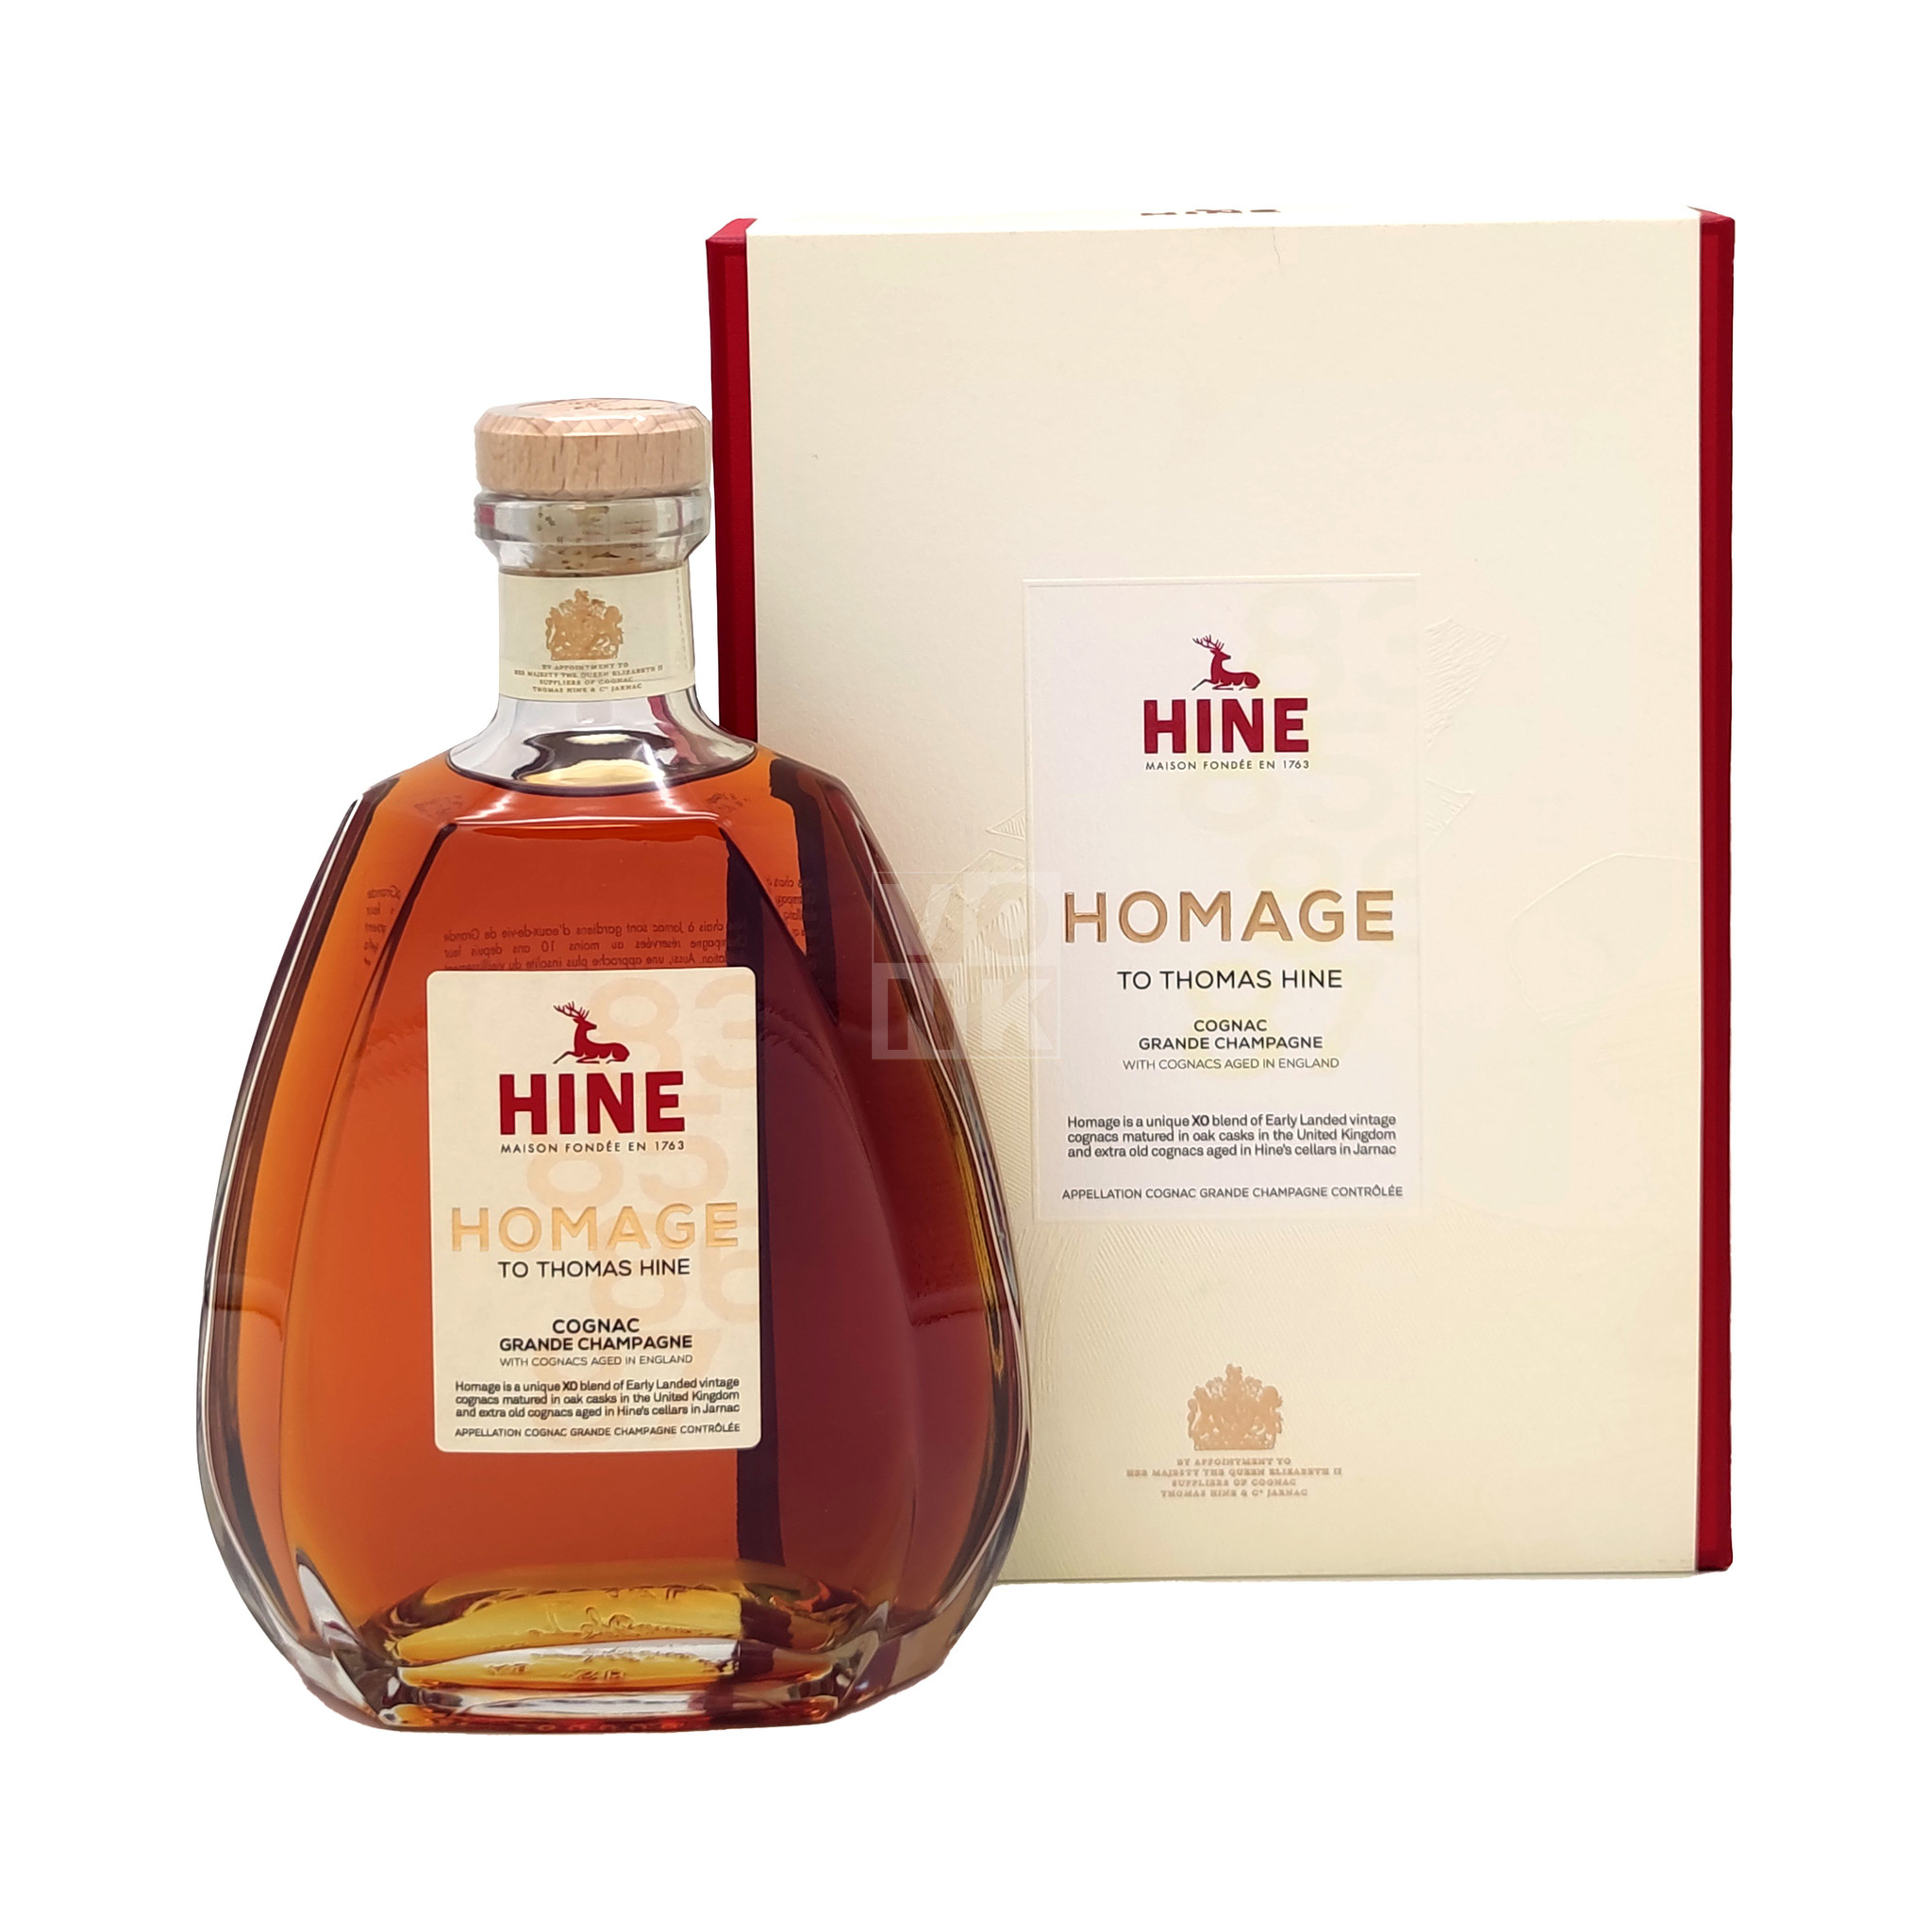 Hine Grande Champagne Cognac Talent de Thomas Hine